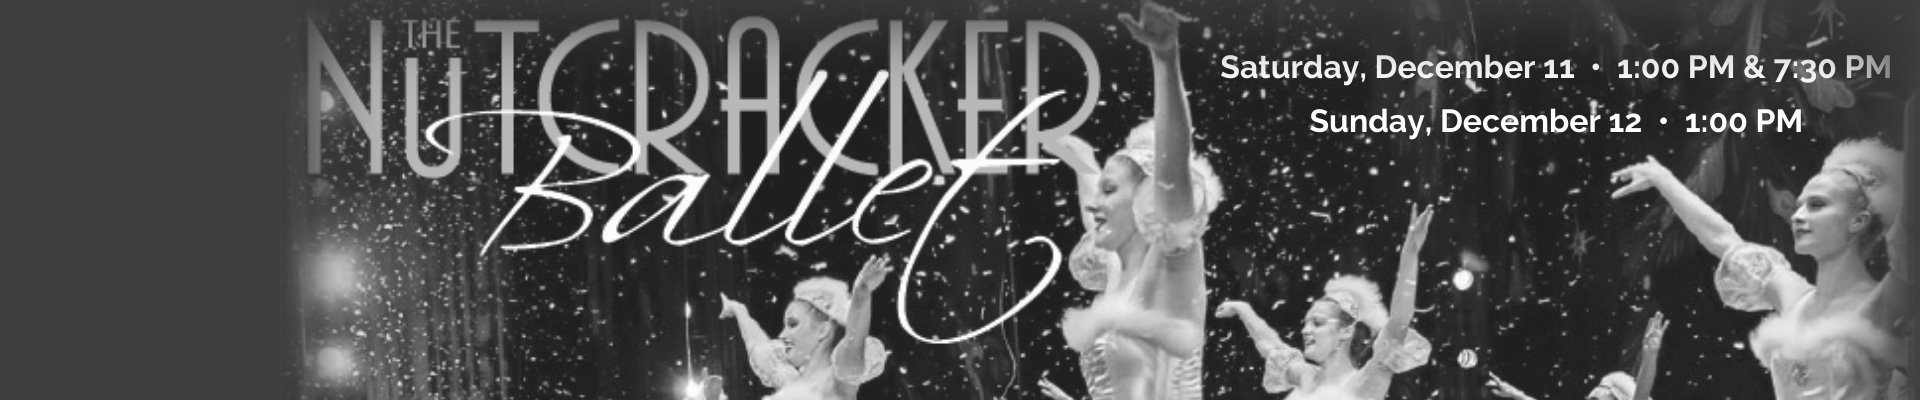 The nutcracker ballet header image